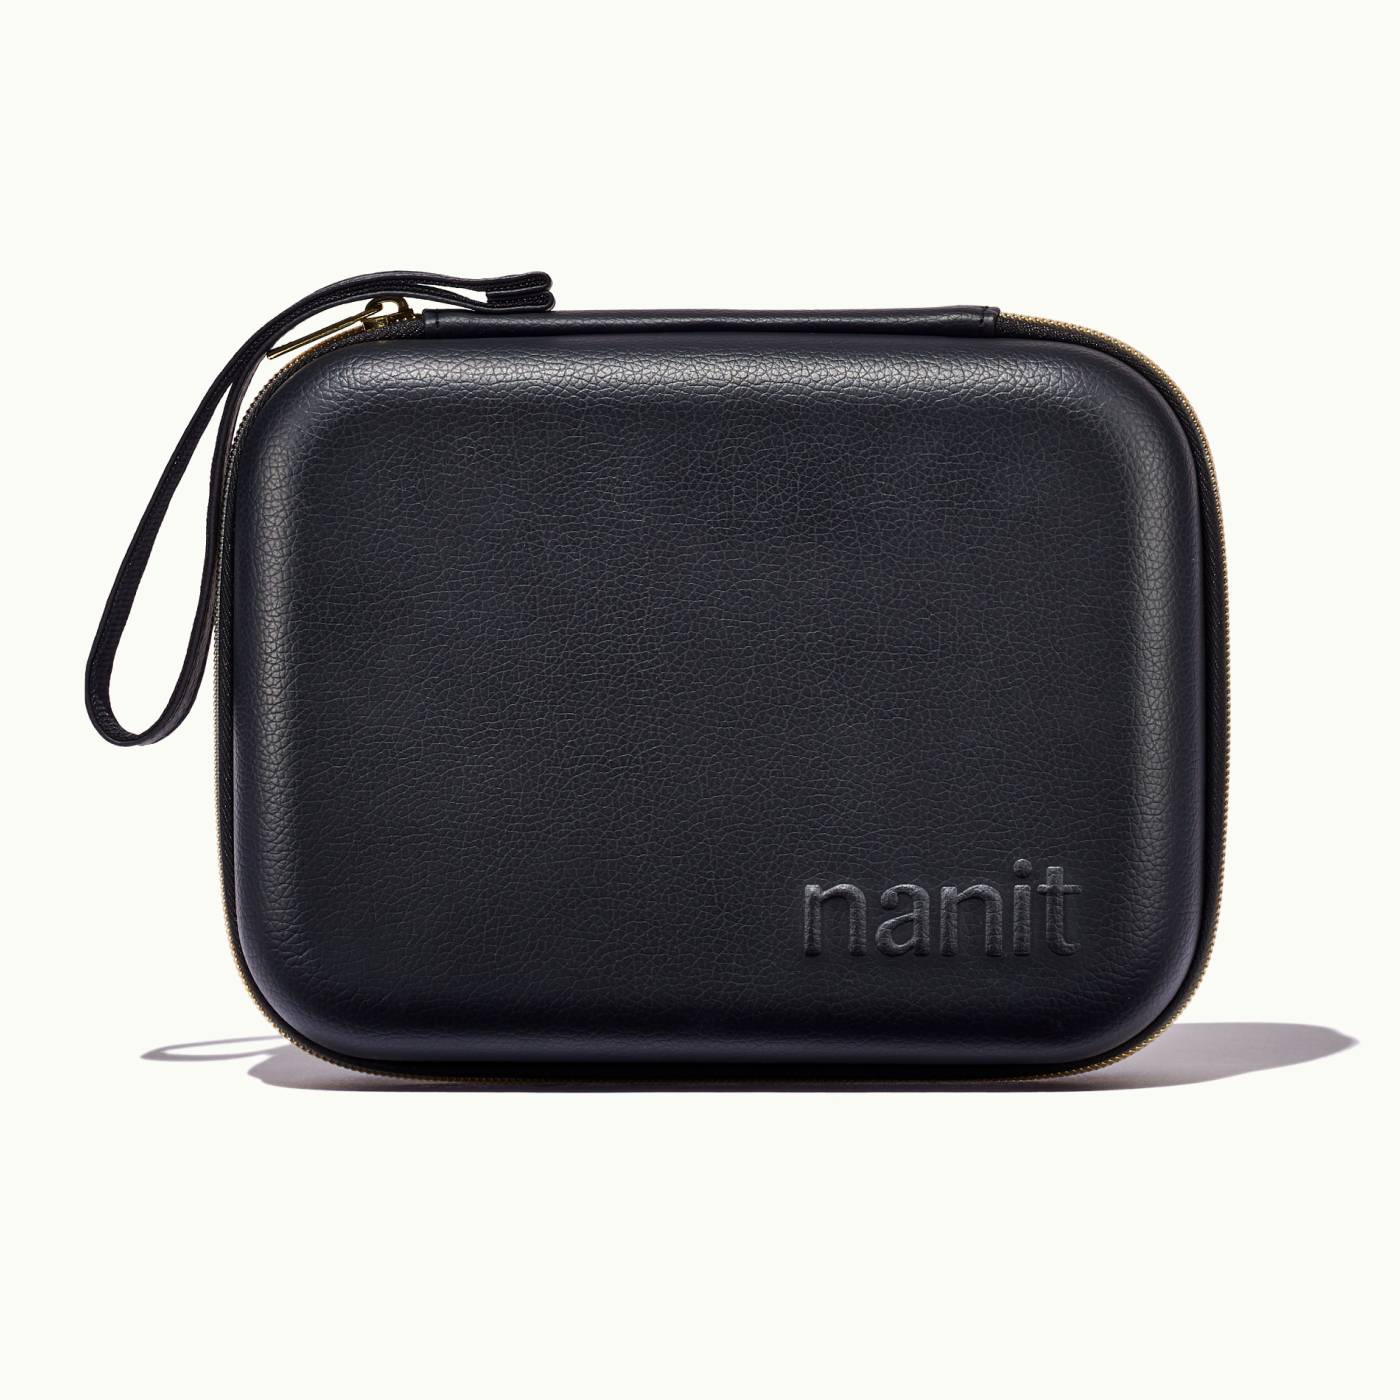 Nanit Travel Pack